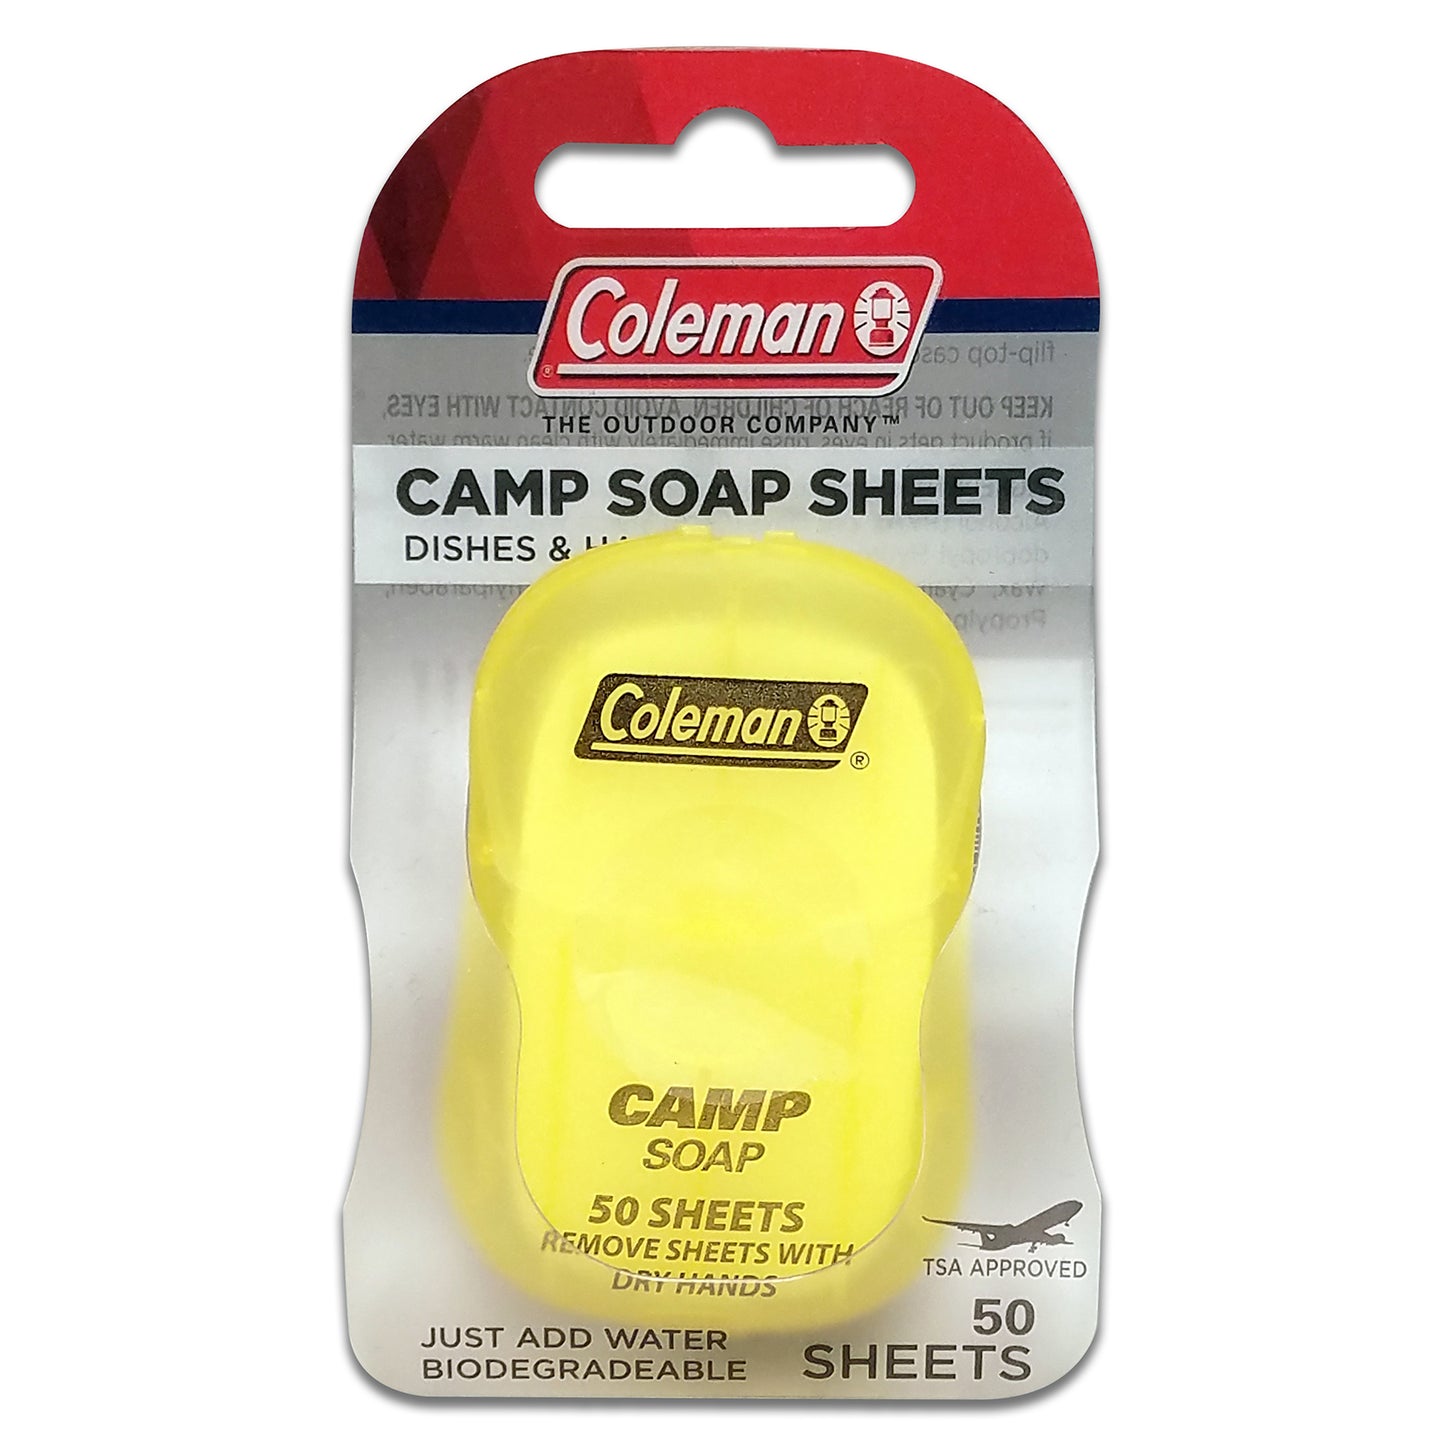 COLEMAN CAMP SOAP SHEETS